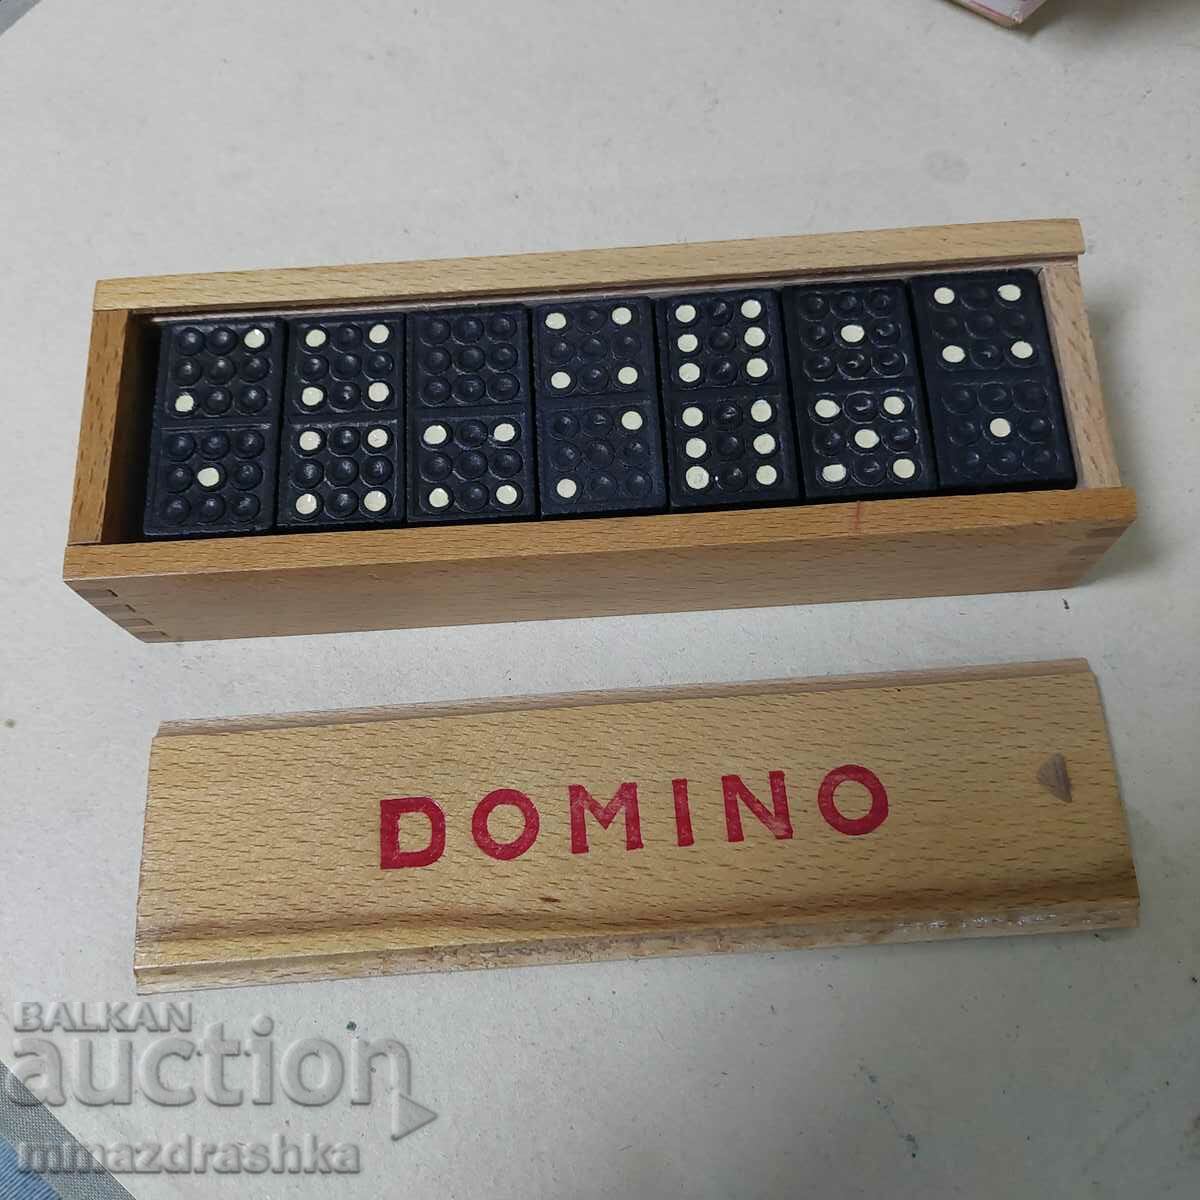 Soca dominoes